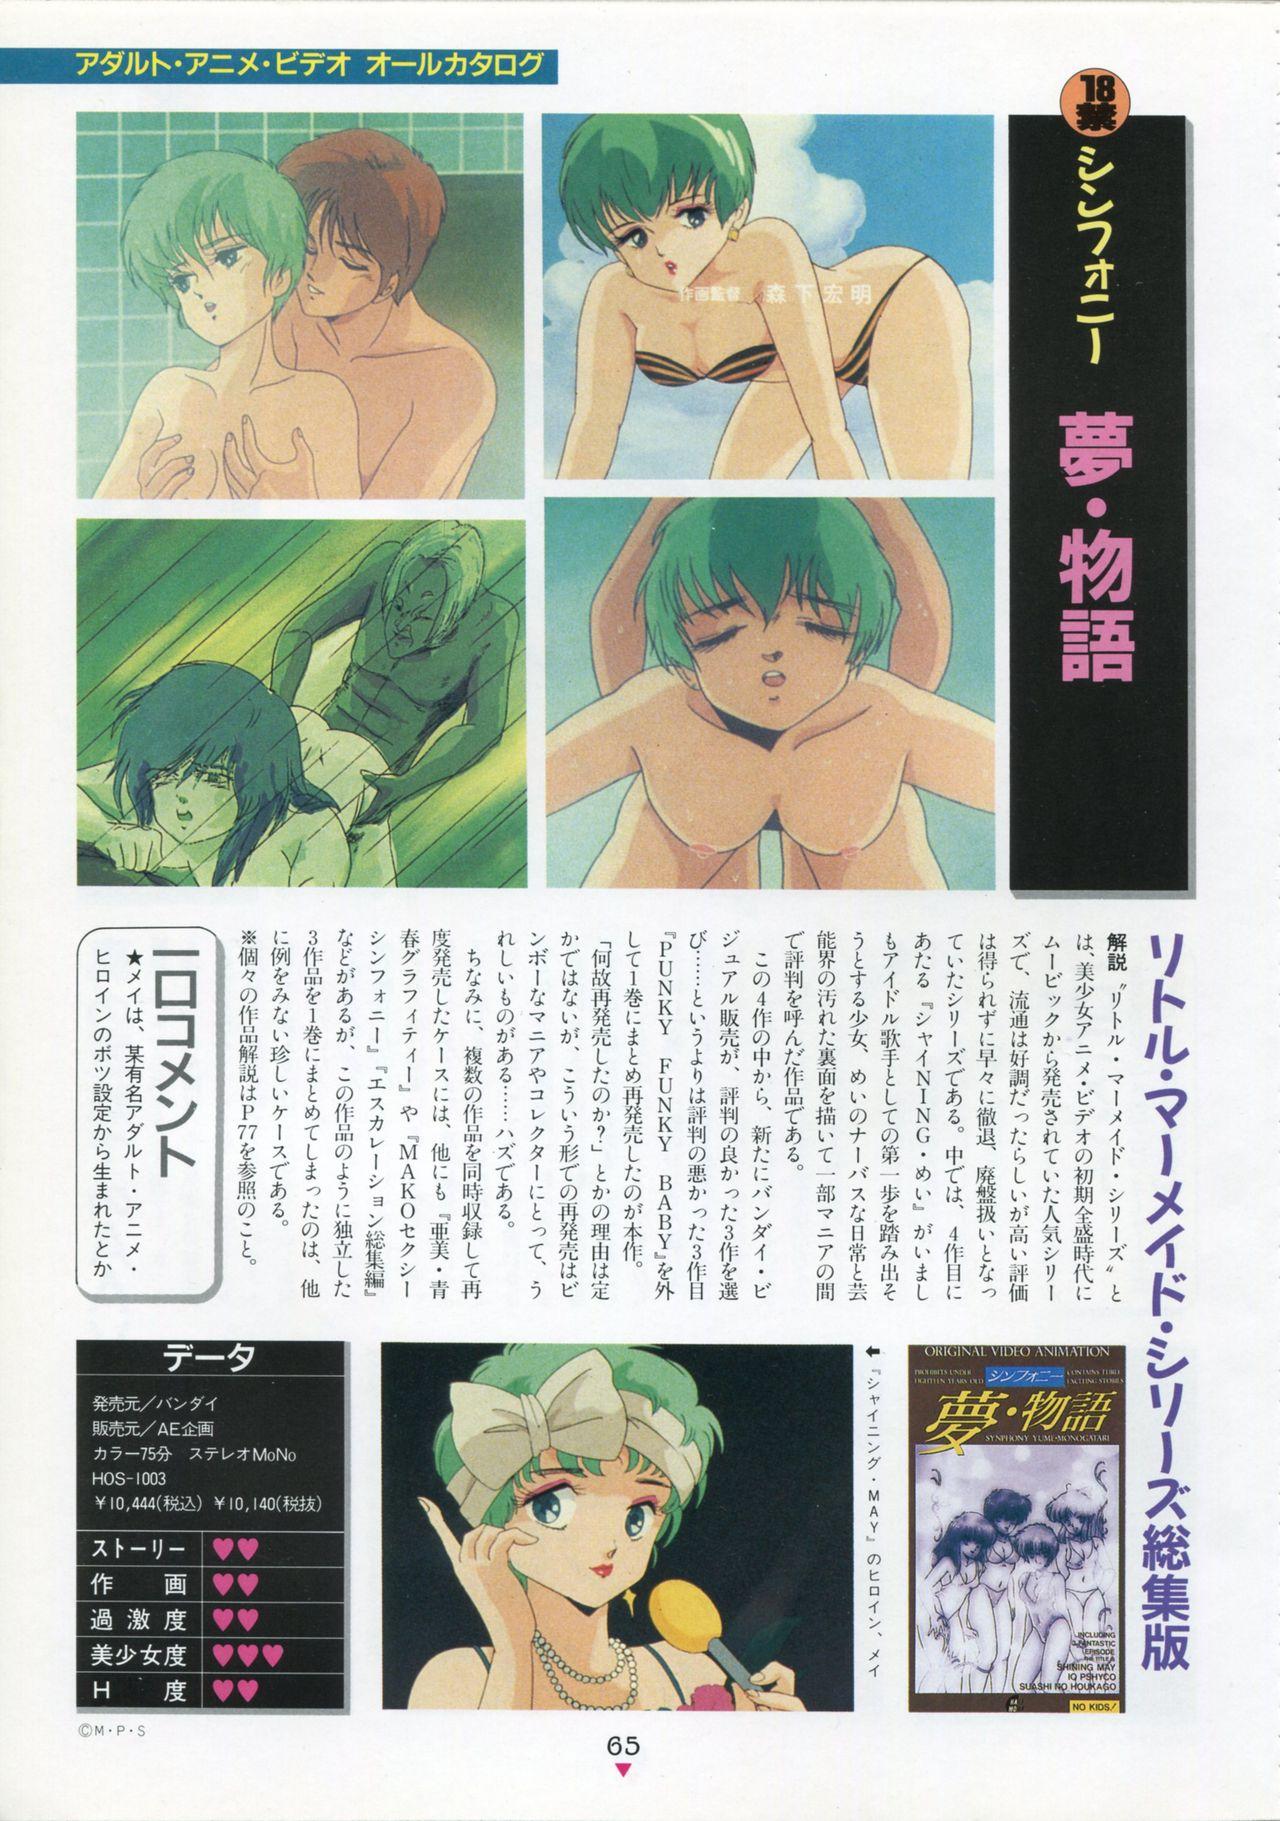 Bishoujo Anime Daizenshuu - Adult Animation Video Catalog 1991 60